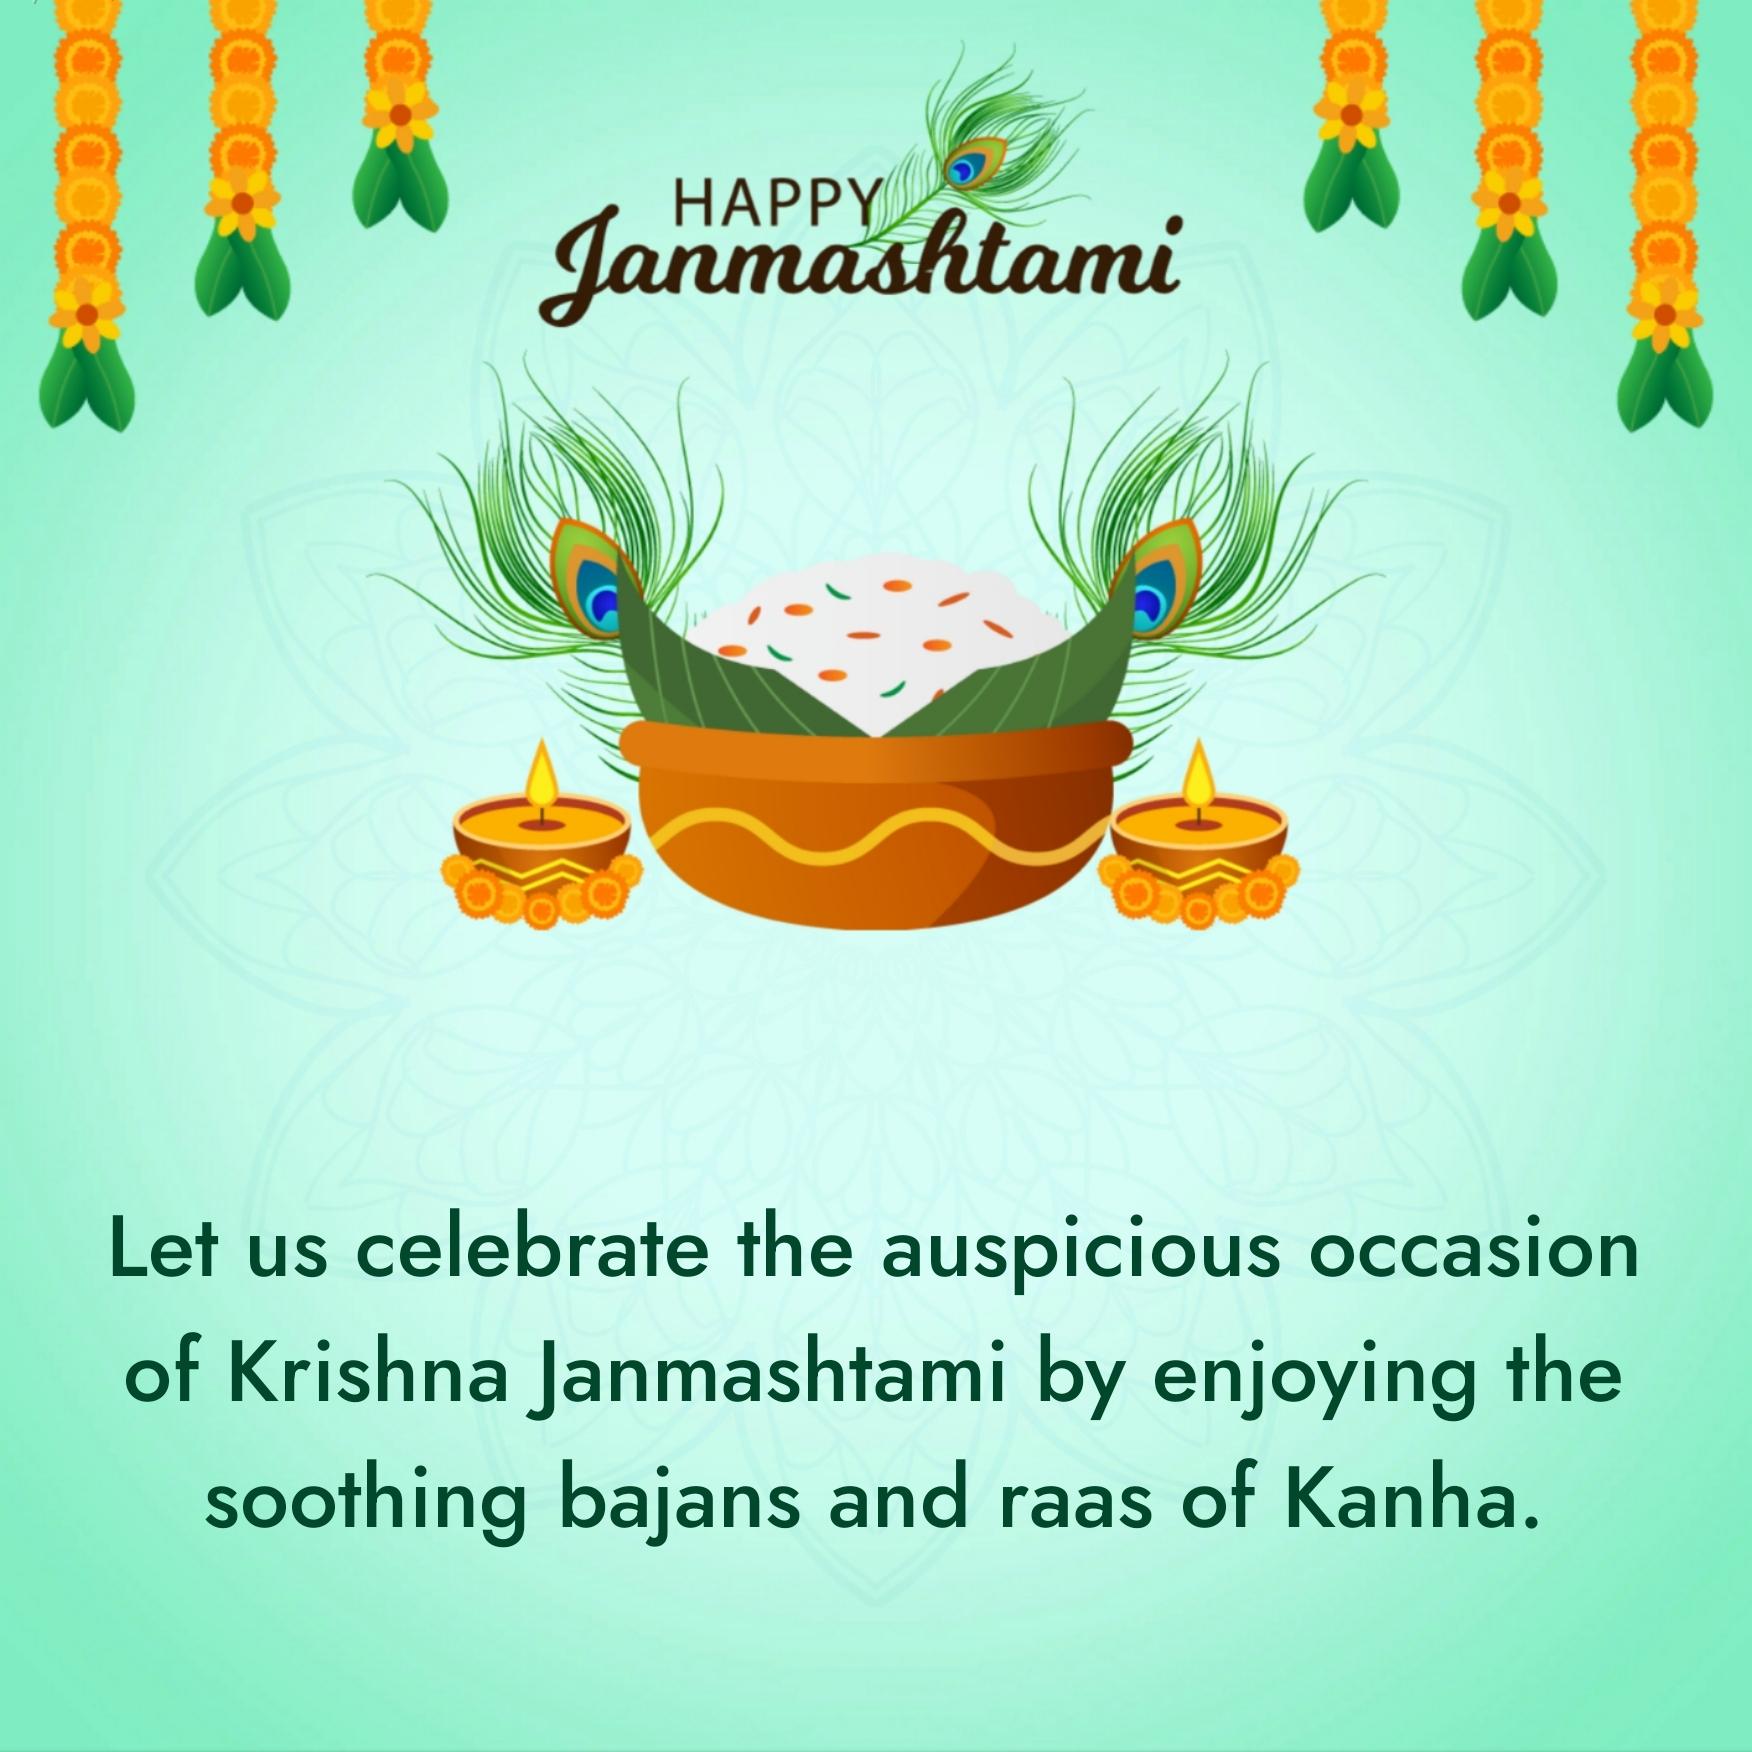 Let us celebrate the auspicious occasion of Krishna Janmashtami